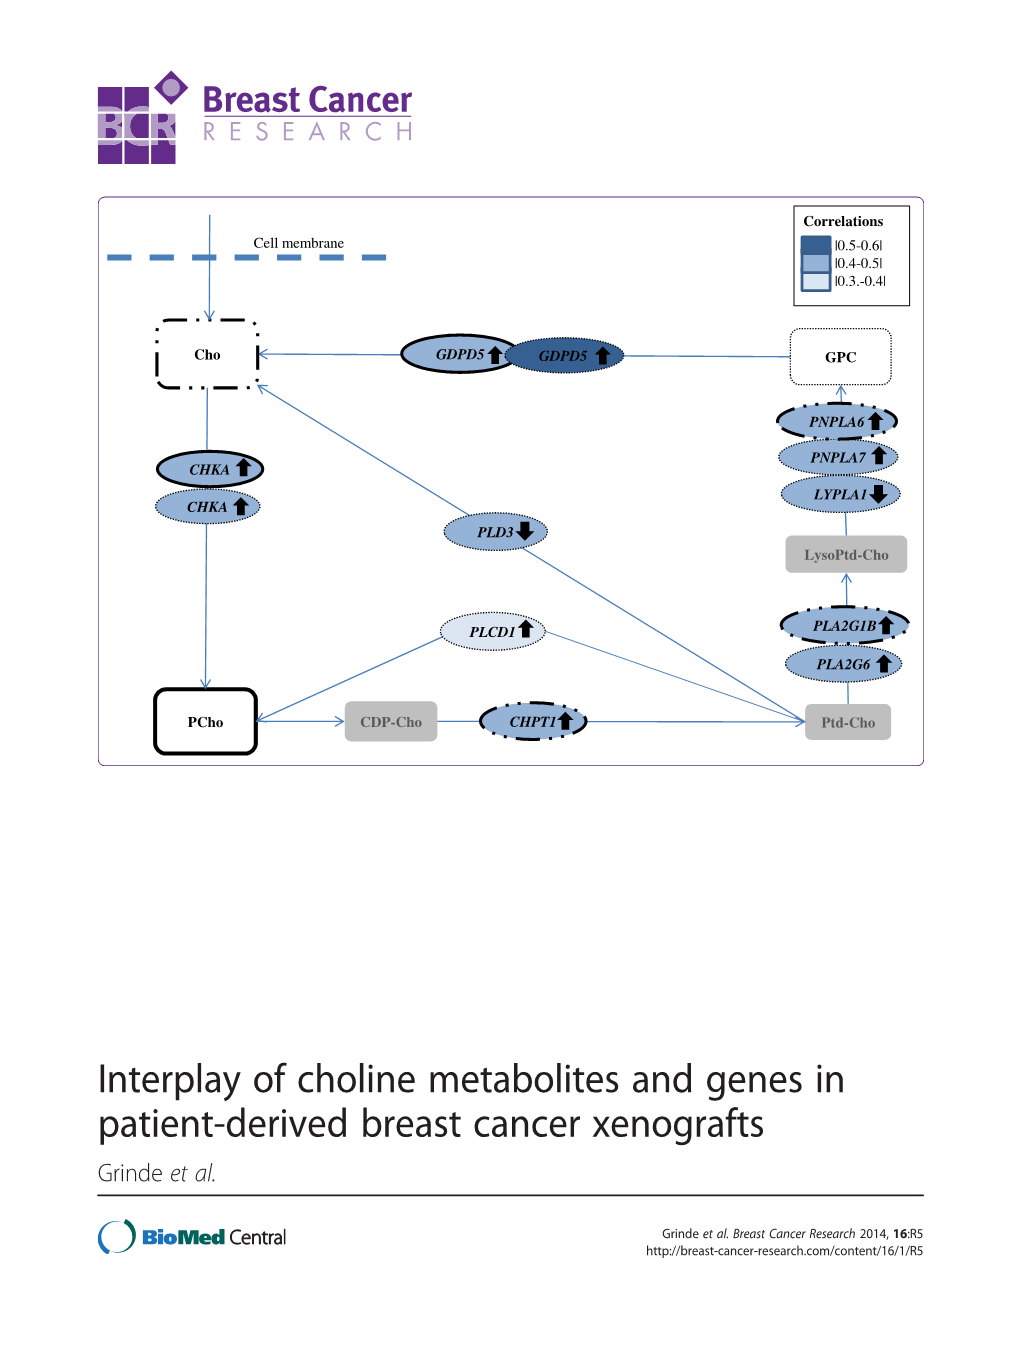 Interplay of Choline Metabolites and Genes in Patient-Derived Breast Cancer Xenografts Grinde Et Al